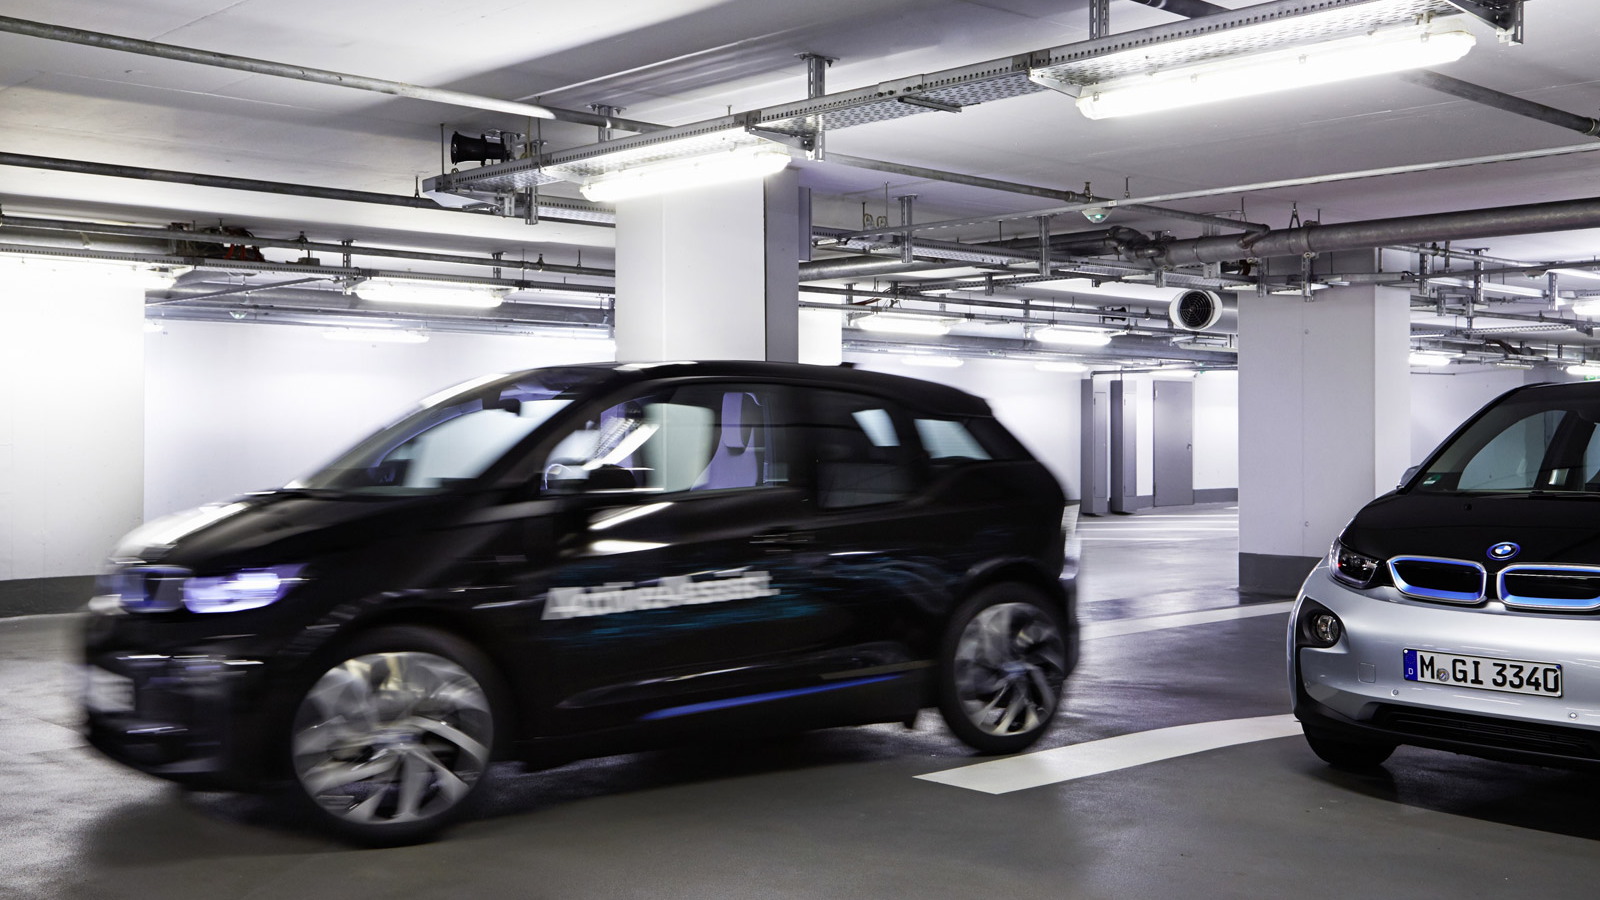 Self-parking BMW i3 ActiveAssist prototype, 2015 Consumer Electronics Show